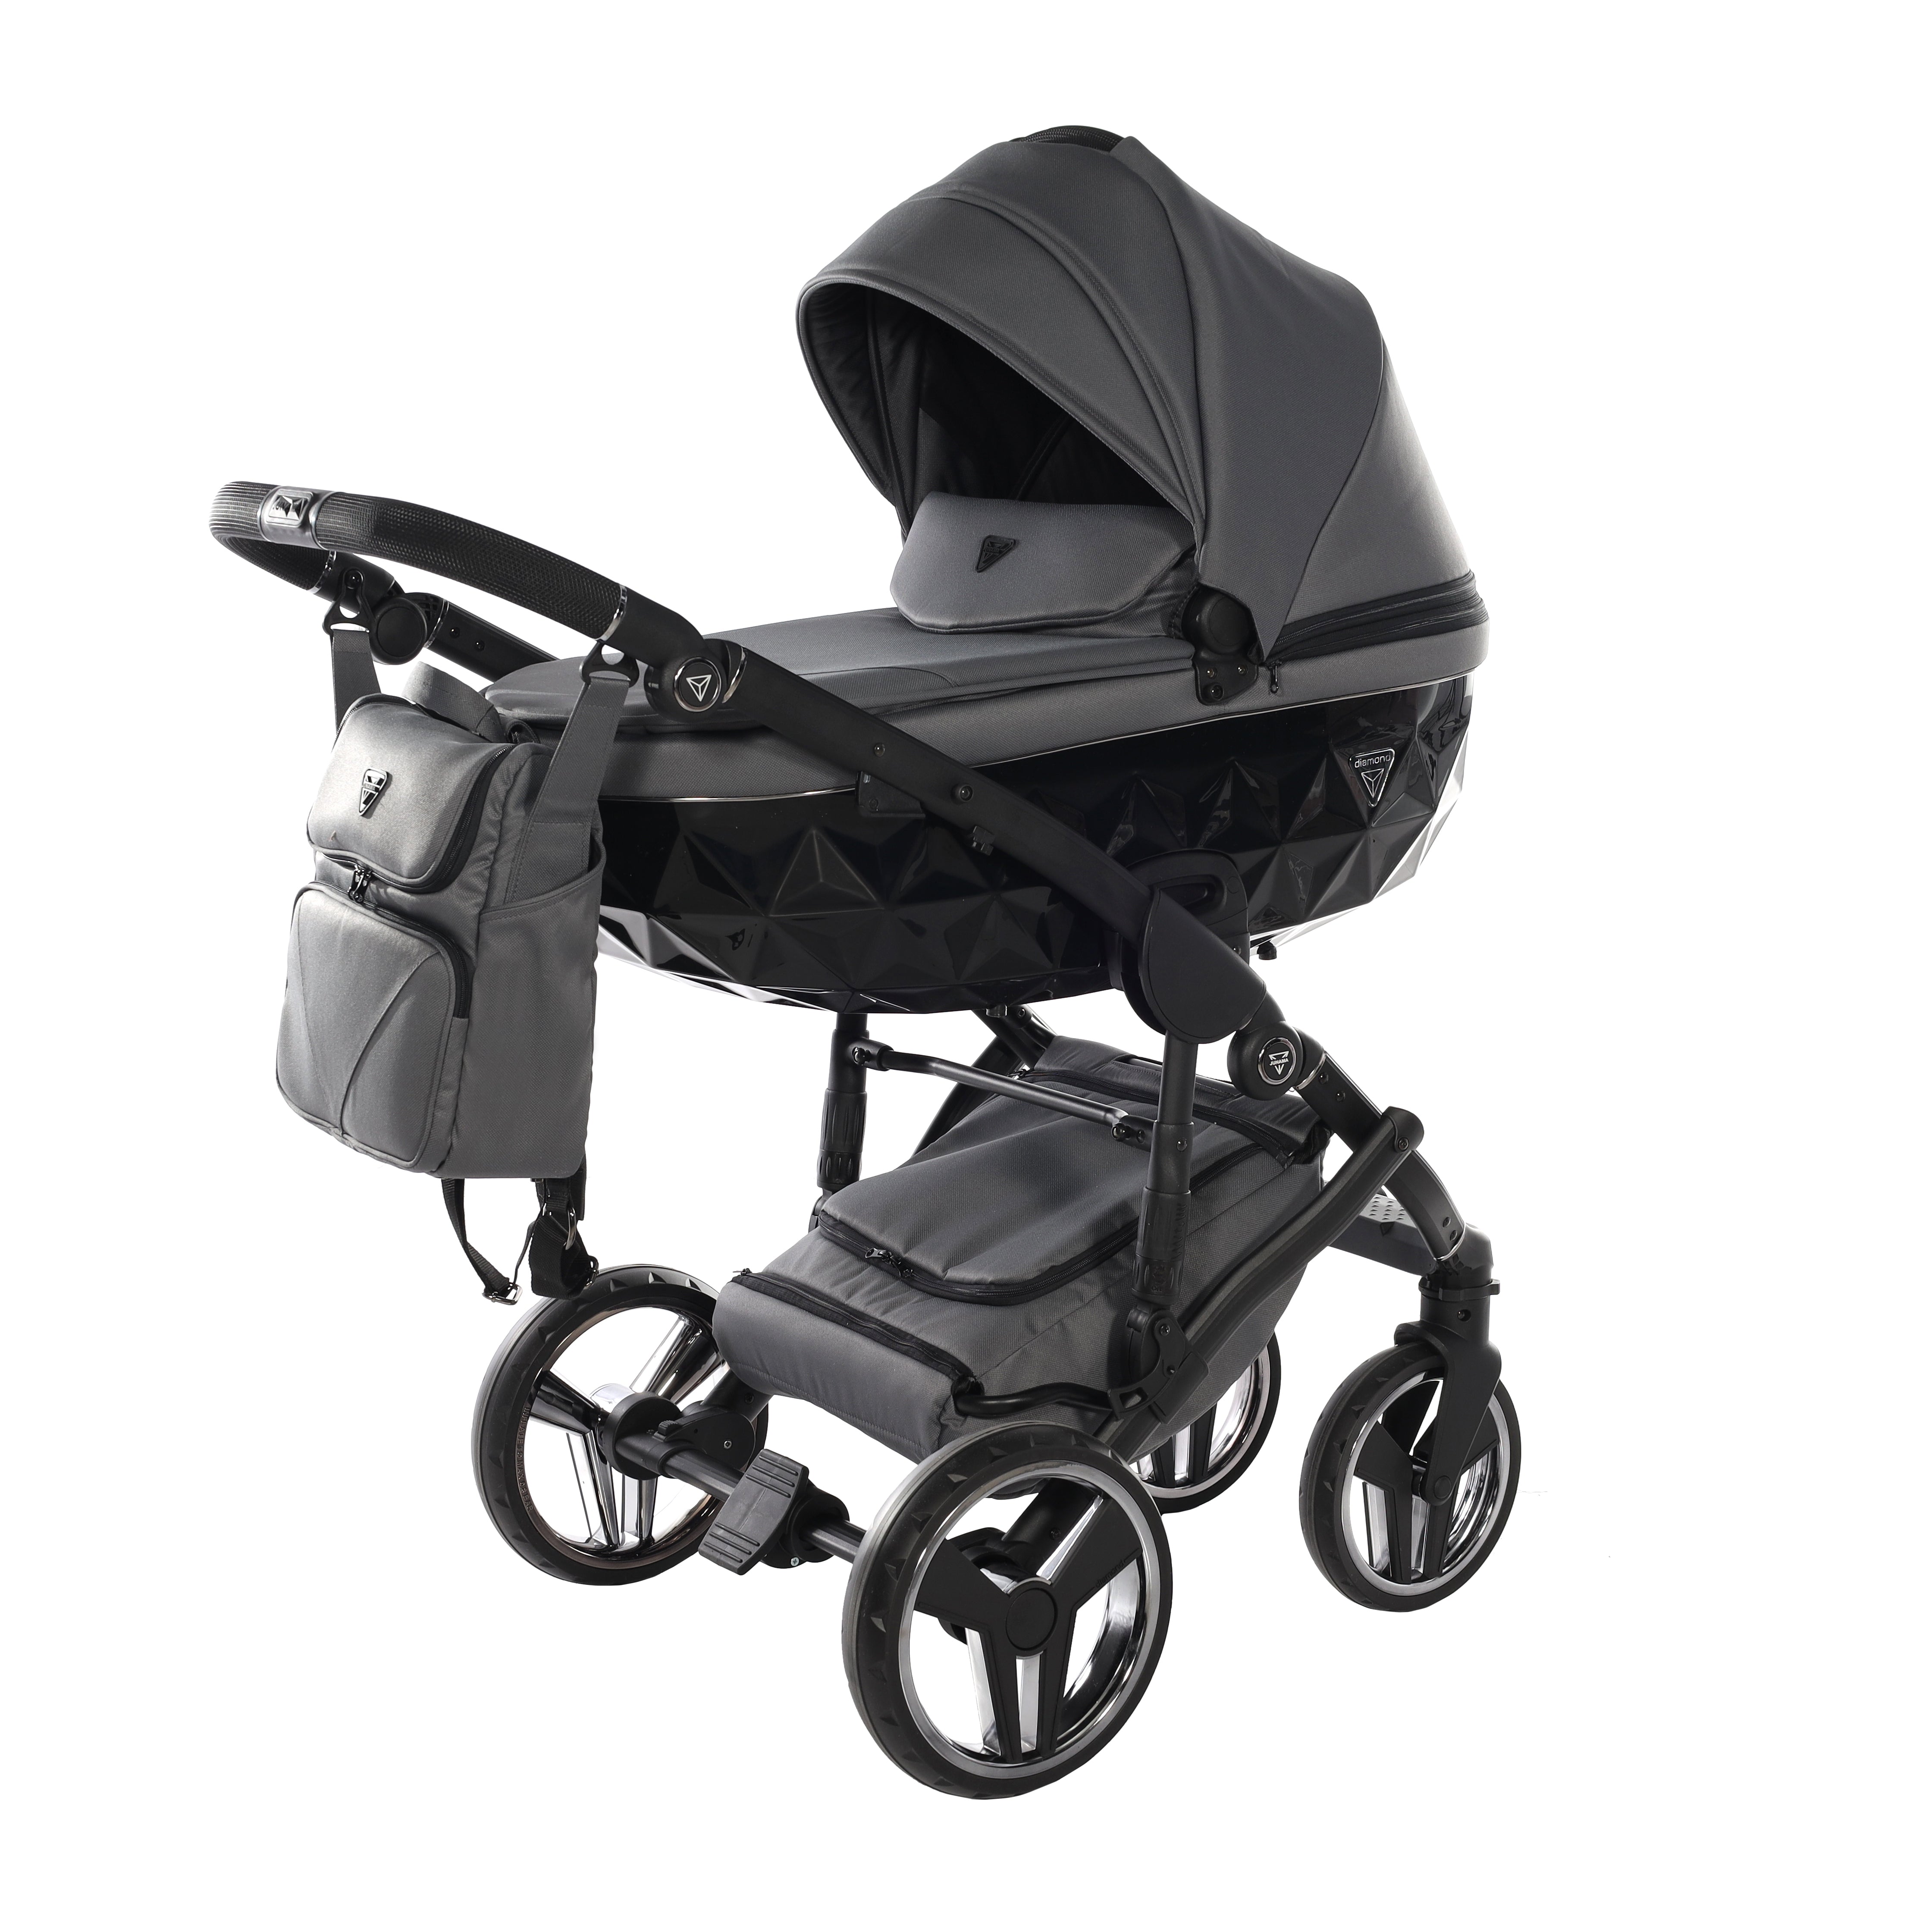 Junama BASIC, baby stroller and bassinet 2 in 1 - GRAY , Code number: JUNBSC03